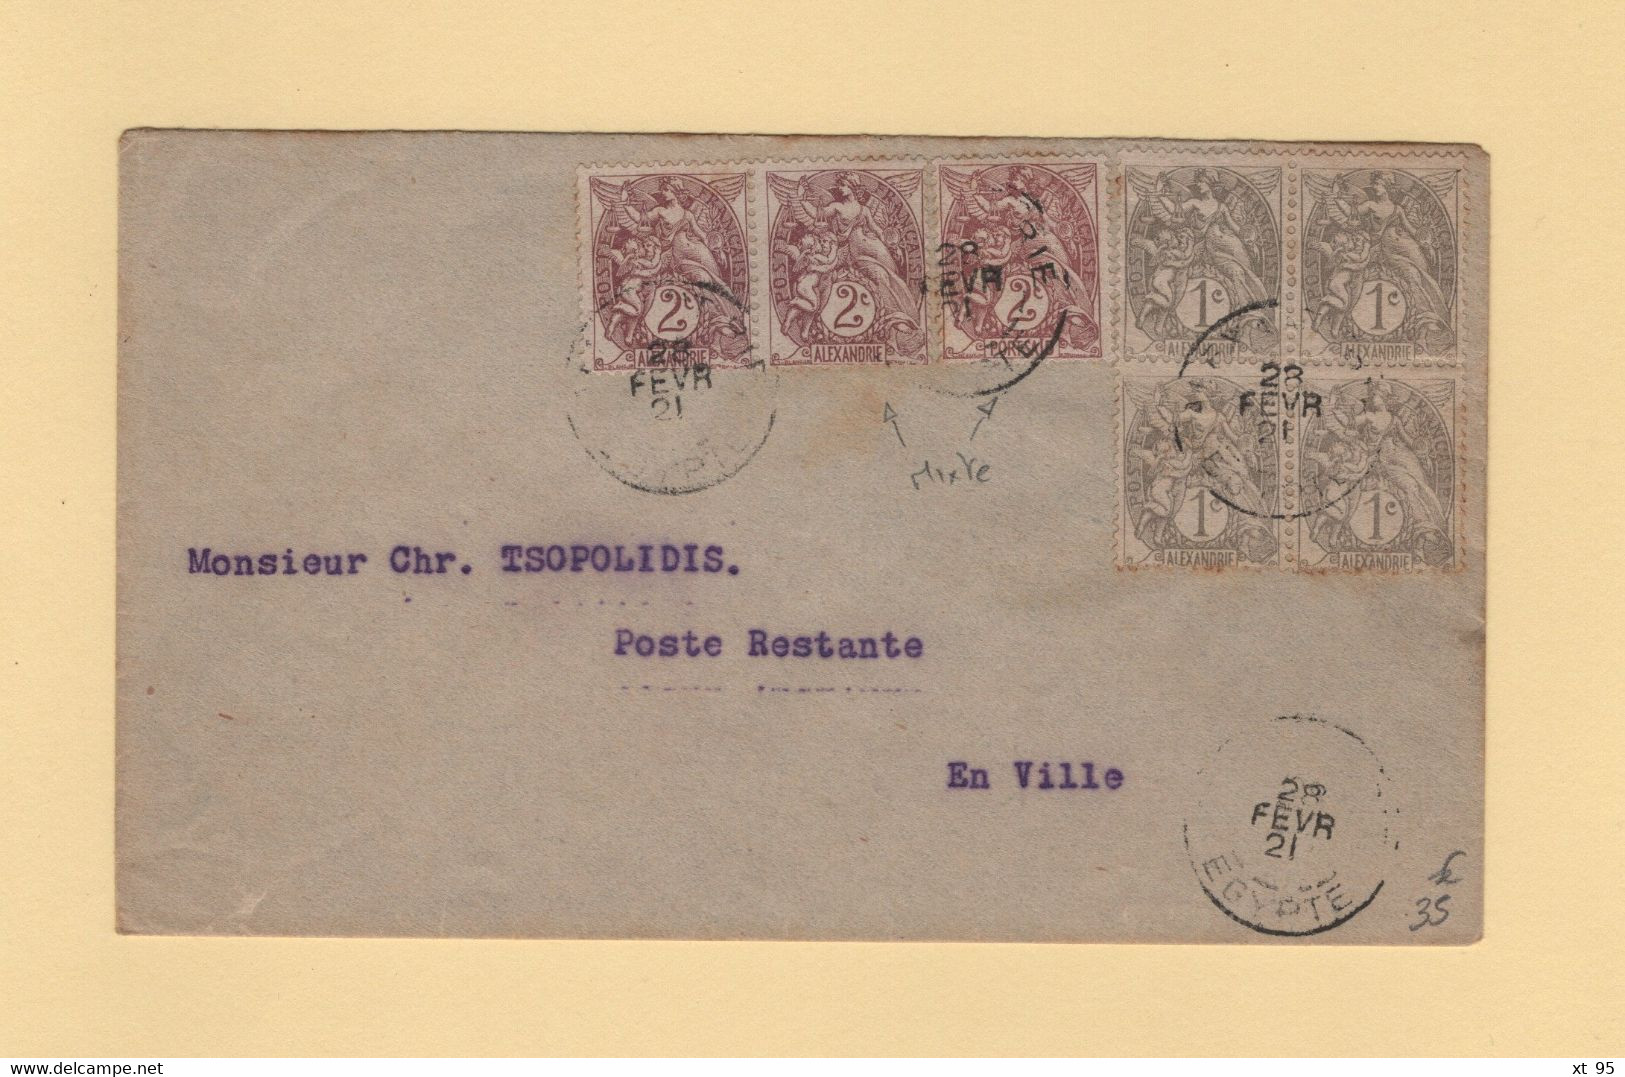 Alexandrie - Egypte - 28 Fevrier 1921 - Affranchissement Mixte Port Said Alexandrie - Type Blanc - Briefe U. Dokumente